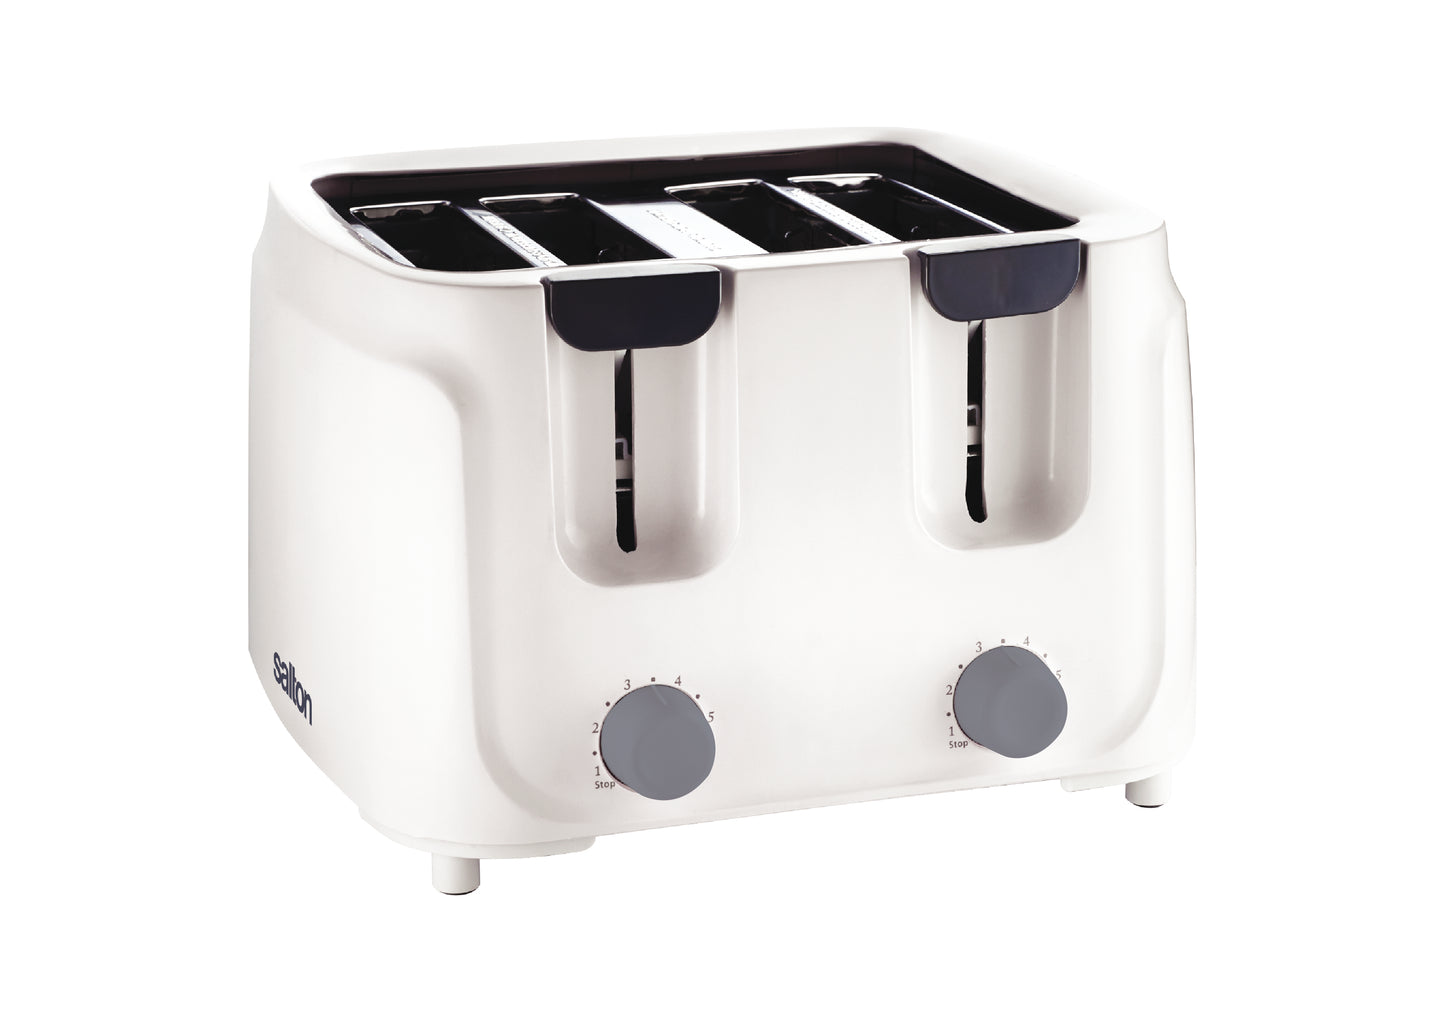 ST4S-09 Salton White Cool Touch 4 Slice Toaster